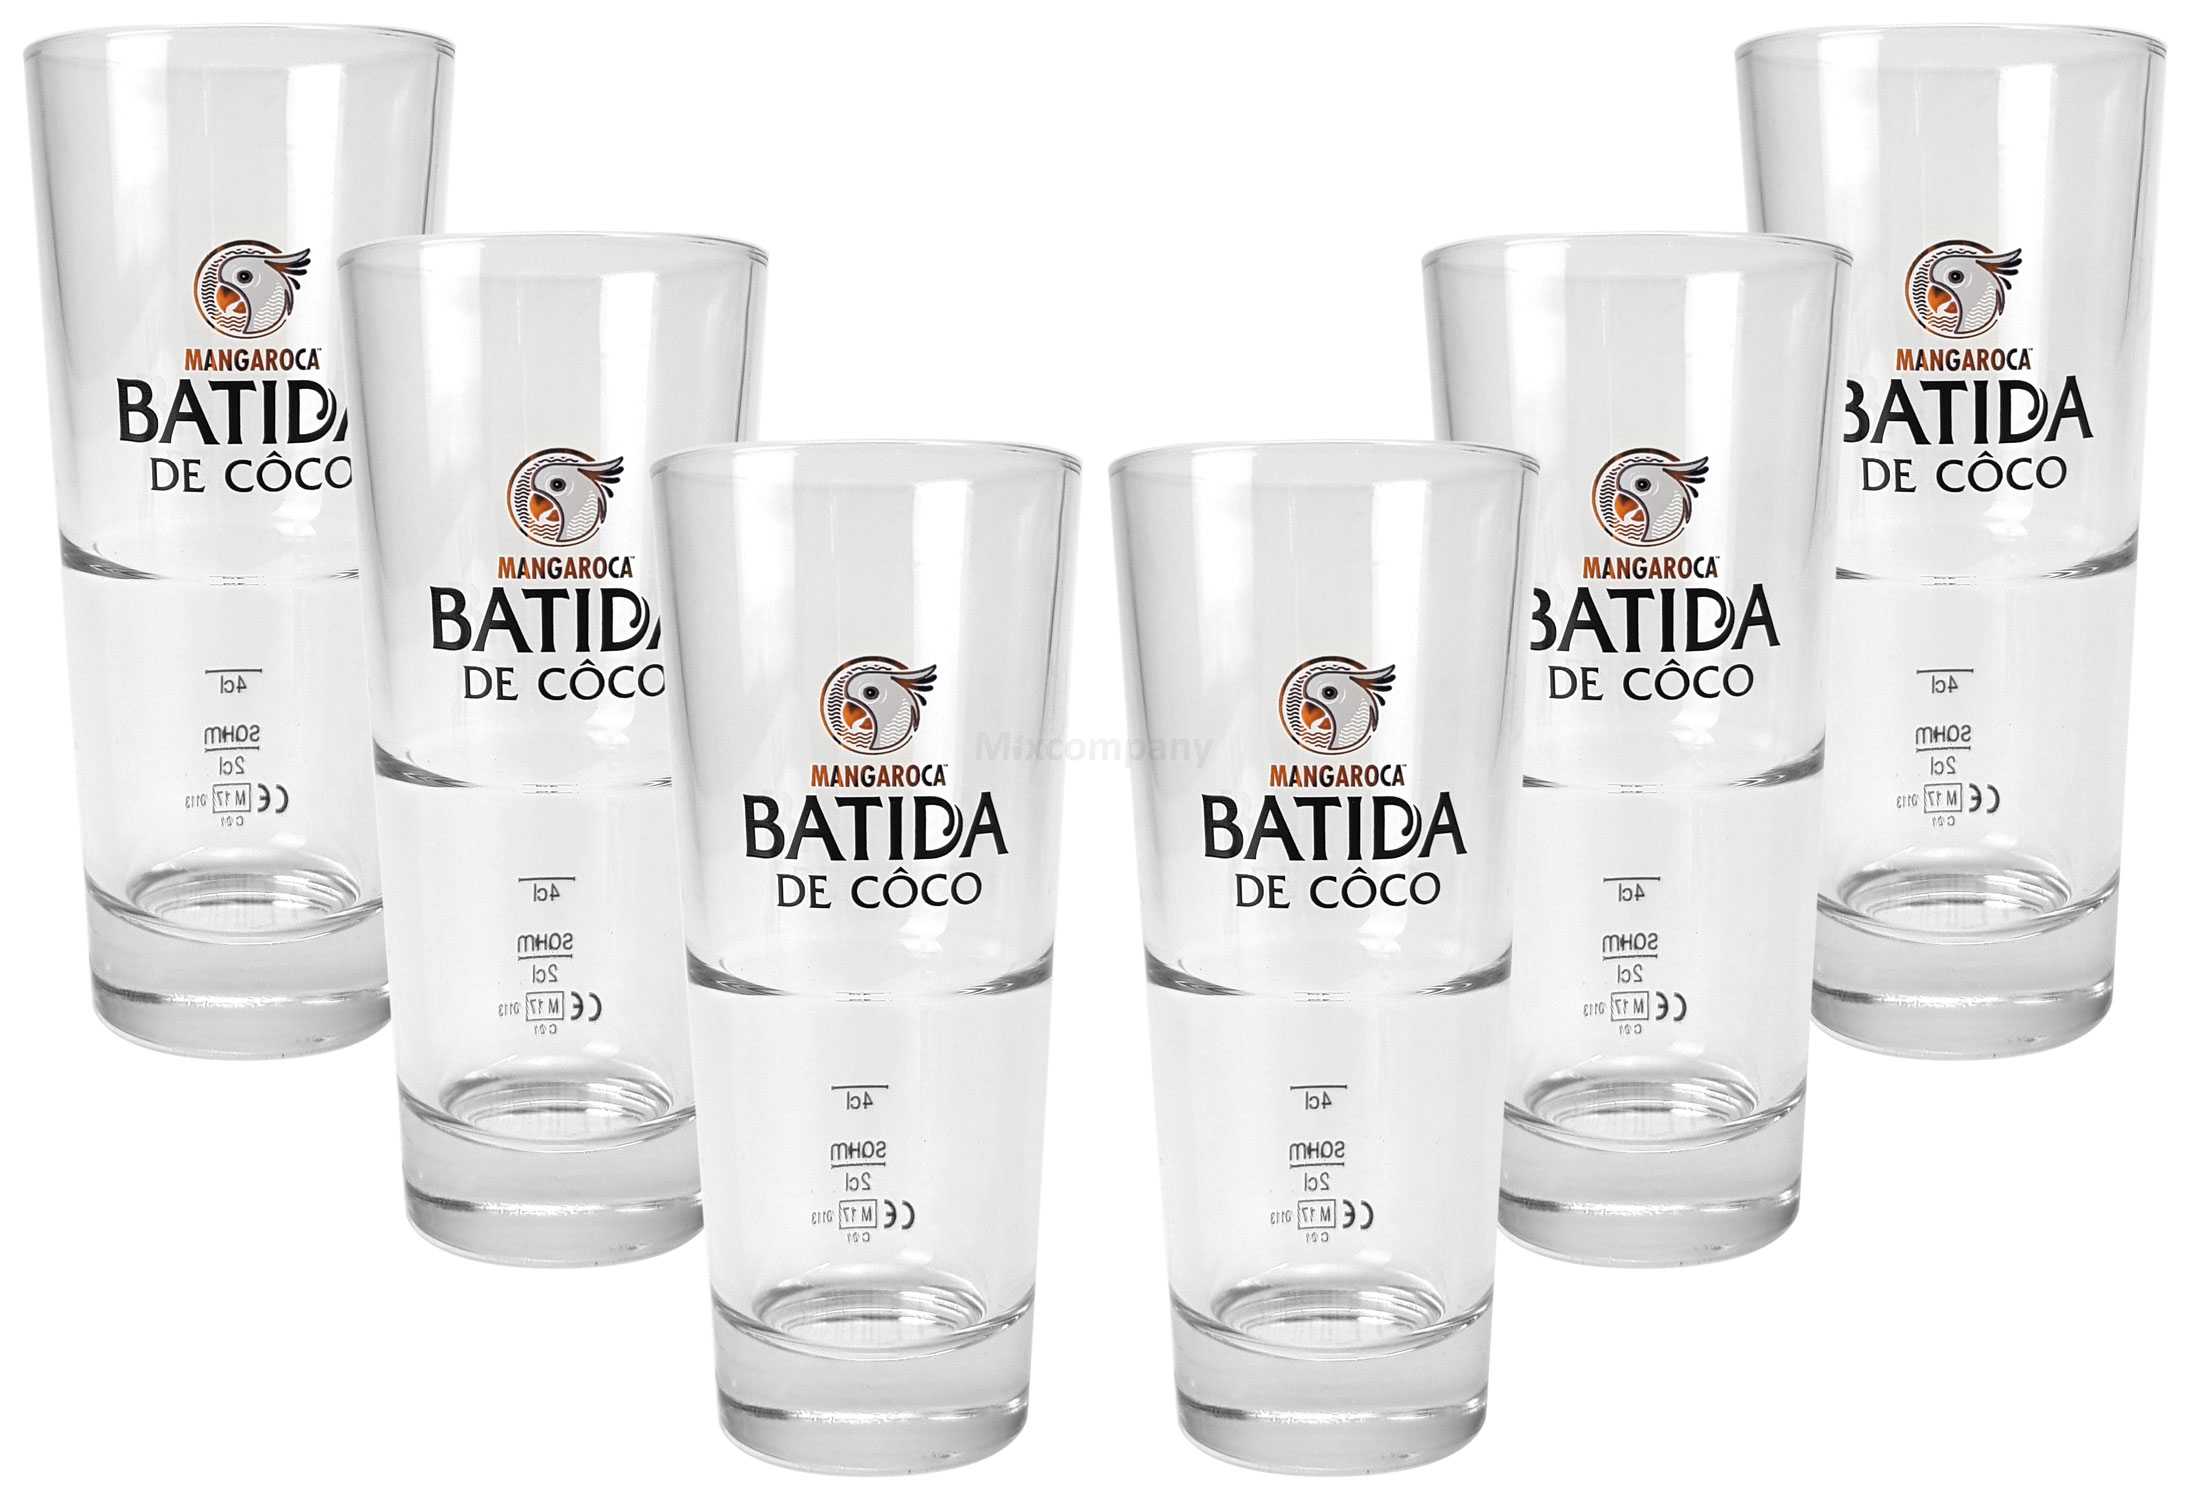 Mangaroca Batida de Coco Longdrinkglas Longdrink Glas Gläser Set - 6x Longdrinkgläser 2/4cl geeicht